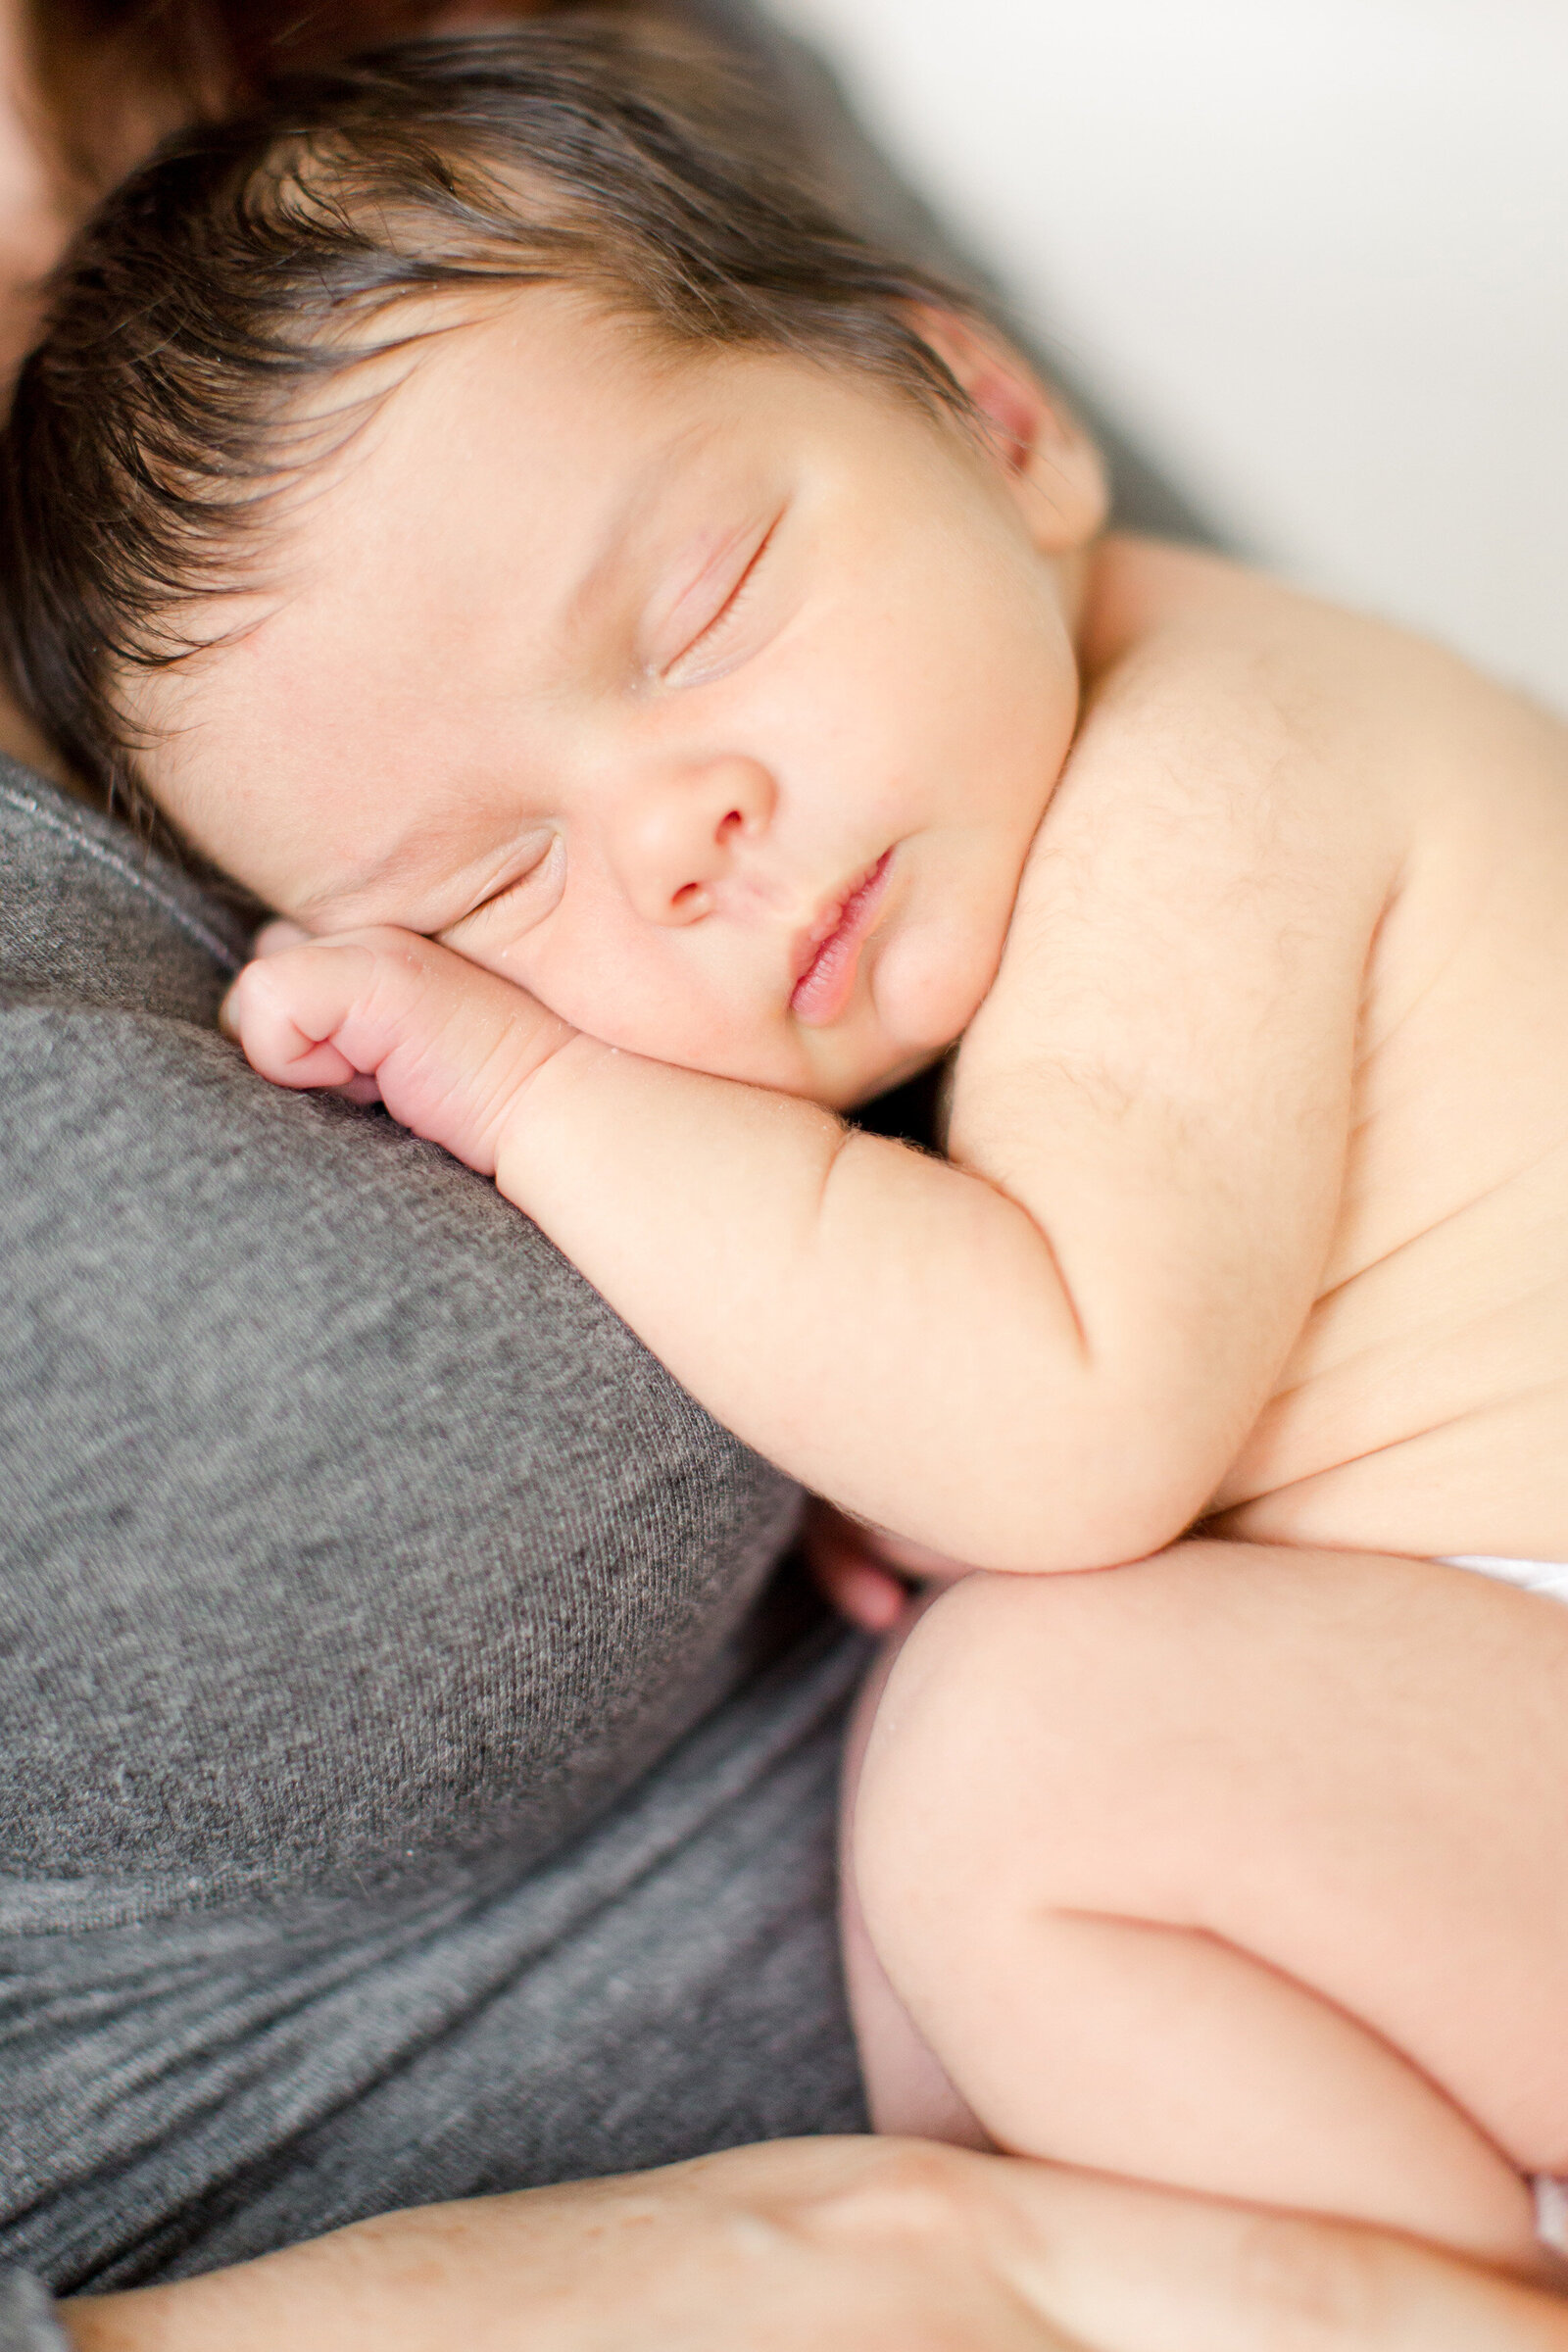 lexington-ky-newborn-photography-by-priscilla-baierlein-297